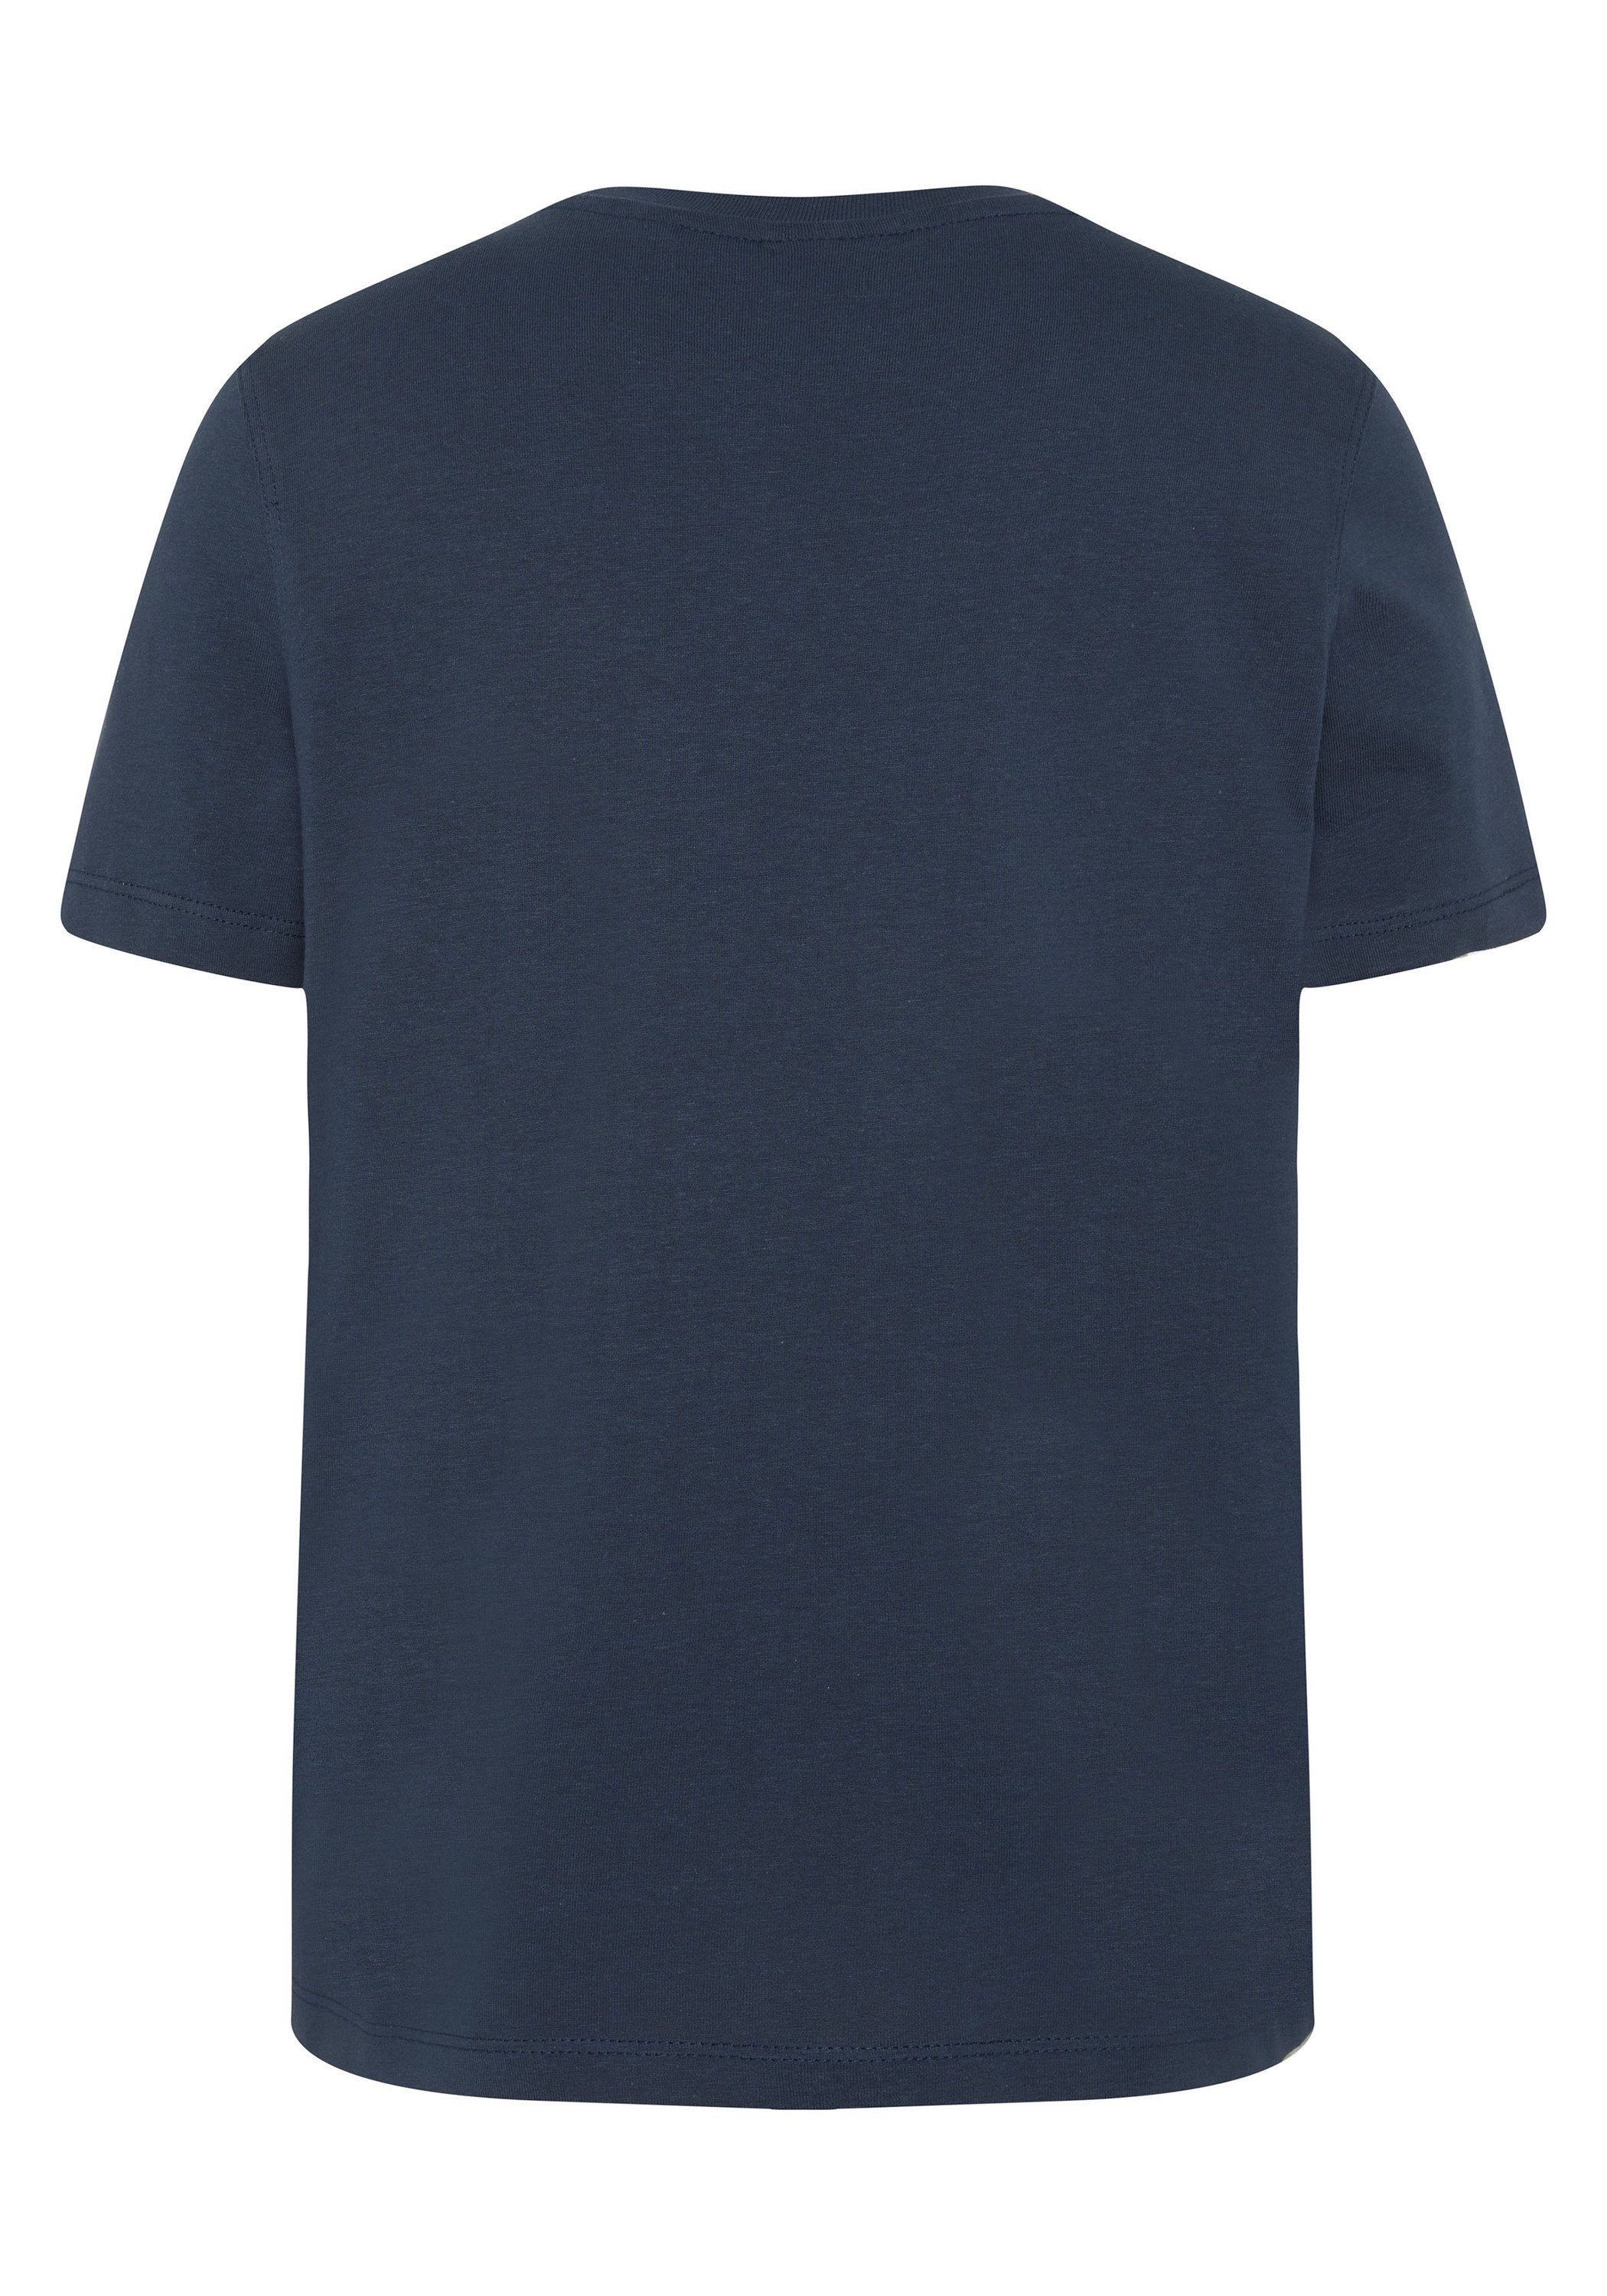 19-4010 reiner Baumwolle Eclipse aus Sylt Print-Shirt Total Polo